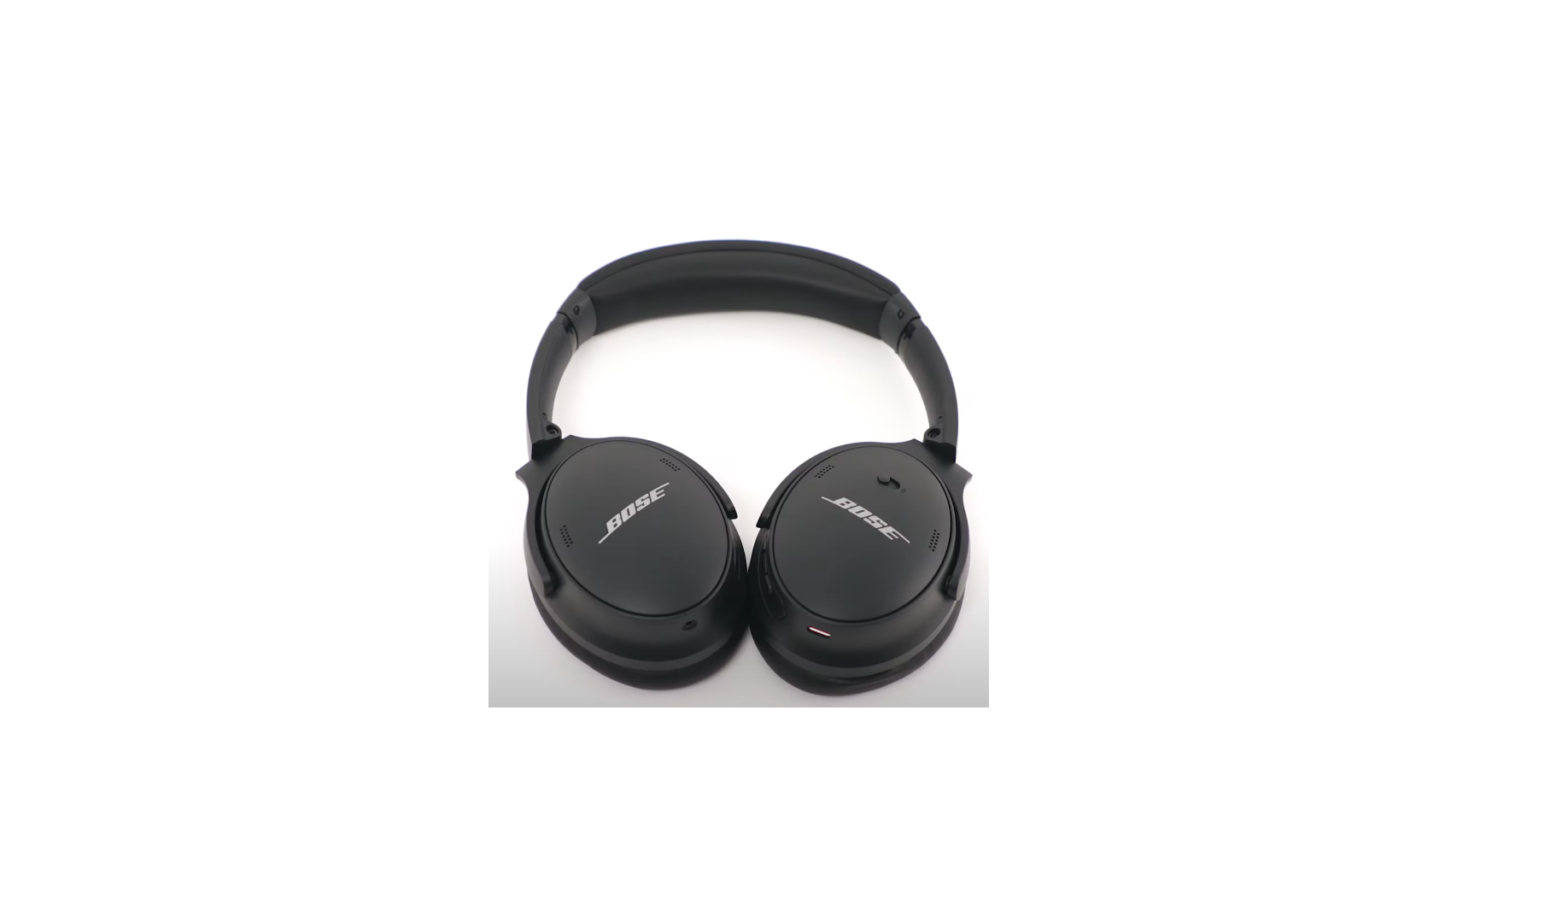 Bose Quiet Comfort® SE headphones featured